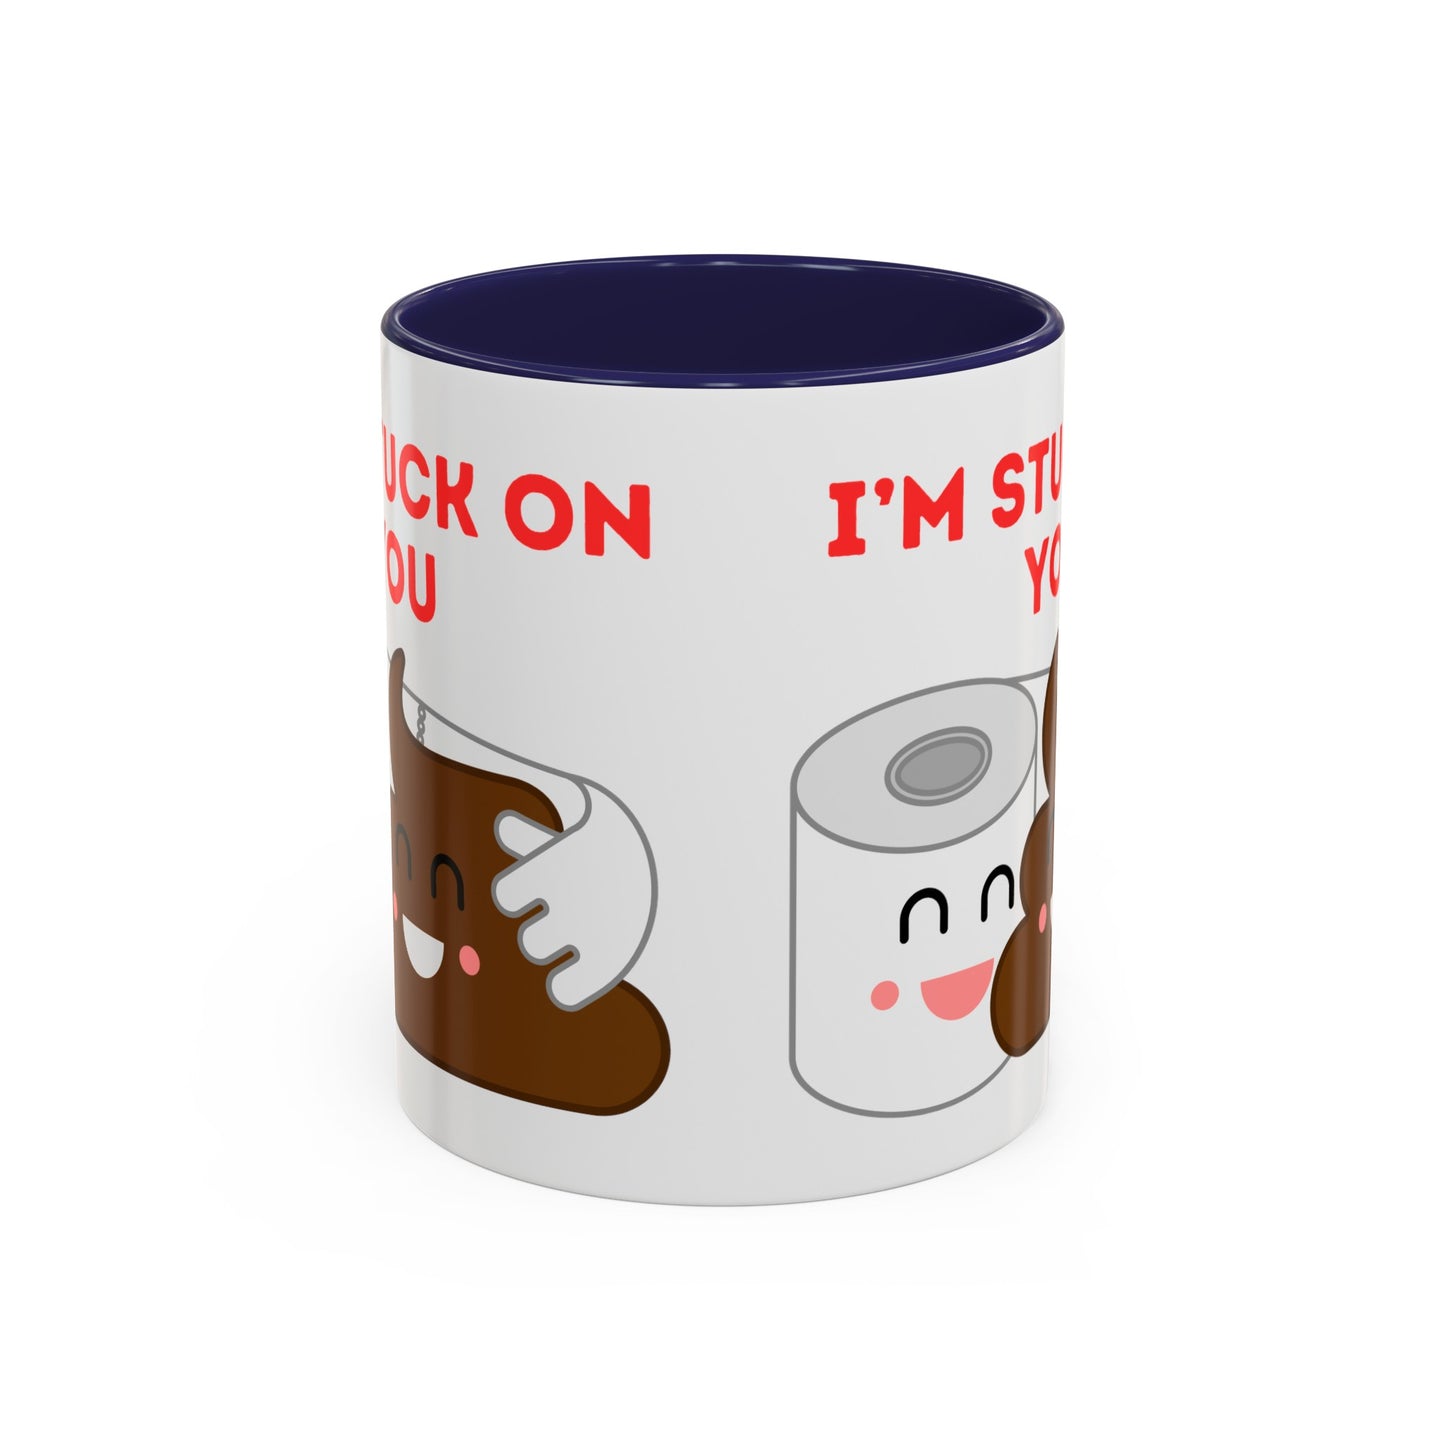 TS- I'm Stuck on You Accent Coffee Mug, 11oz